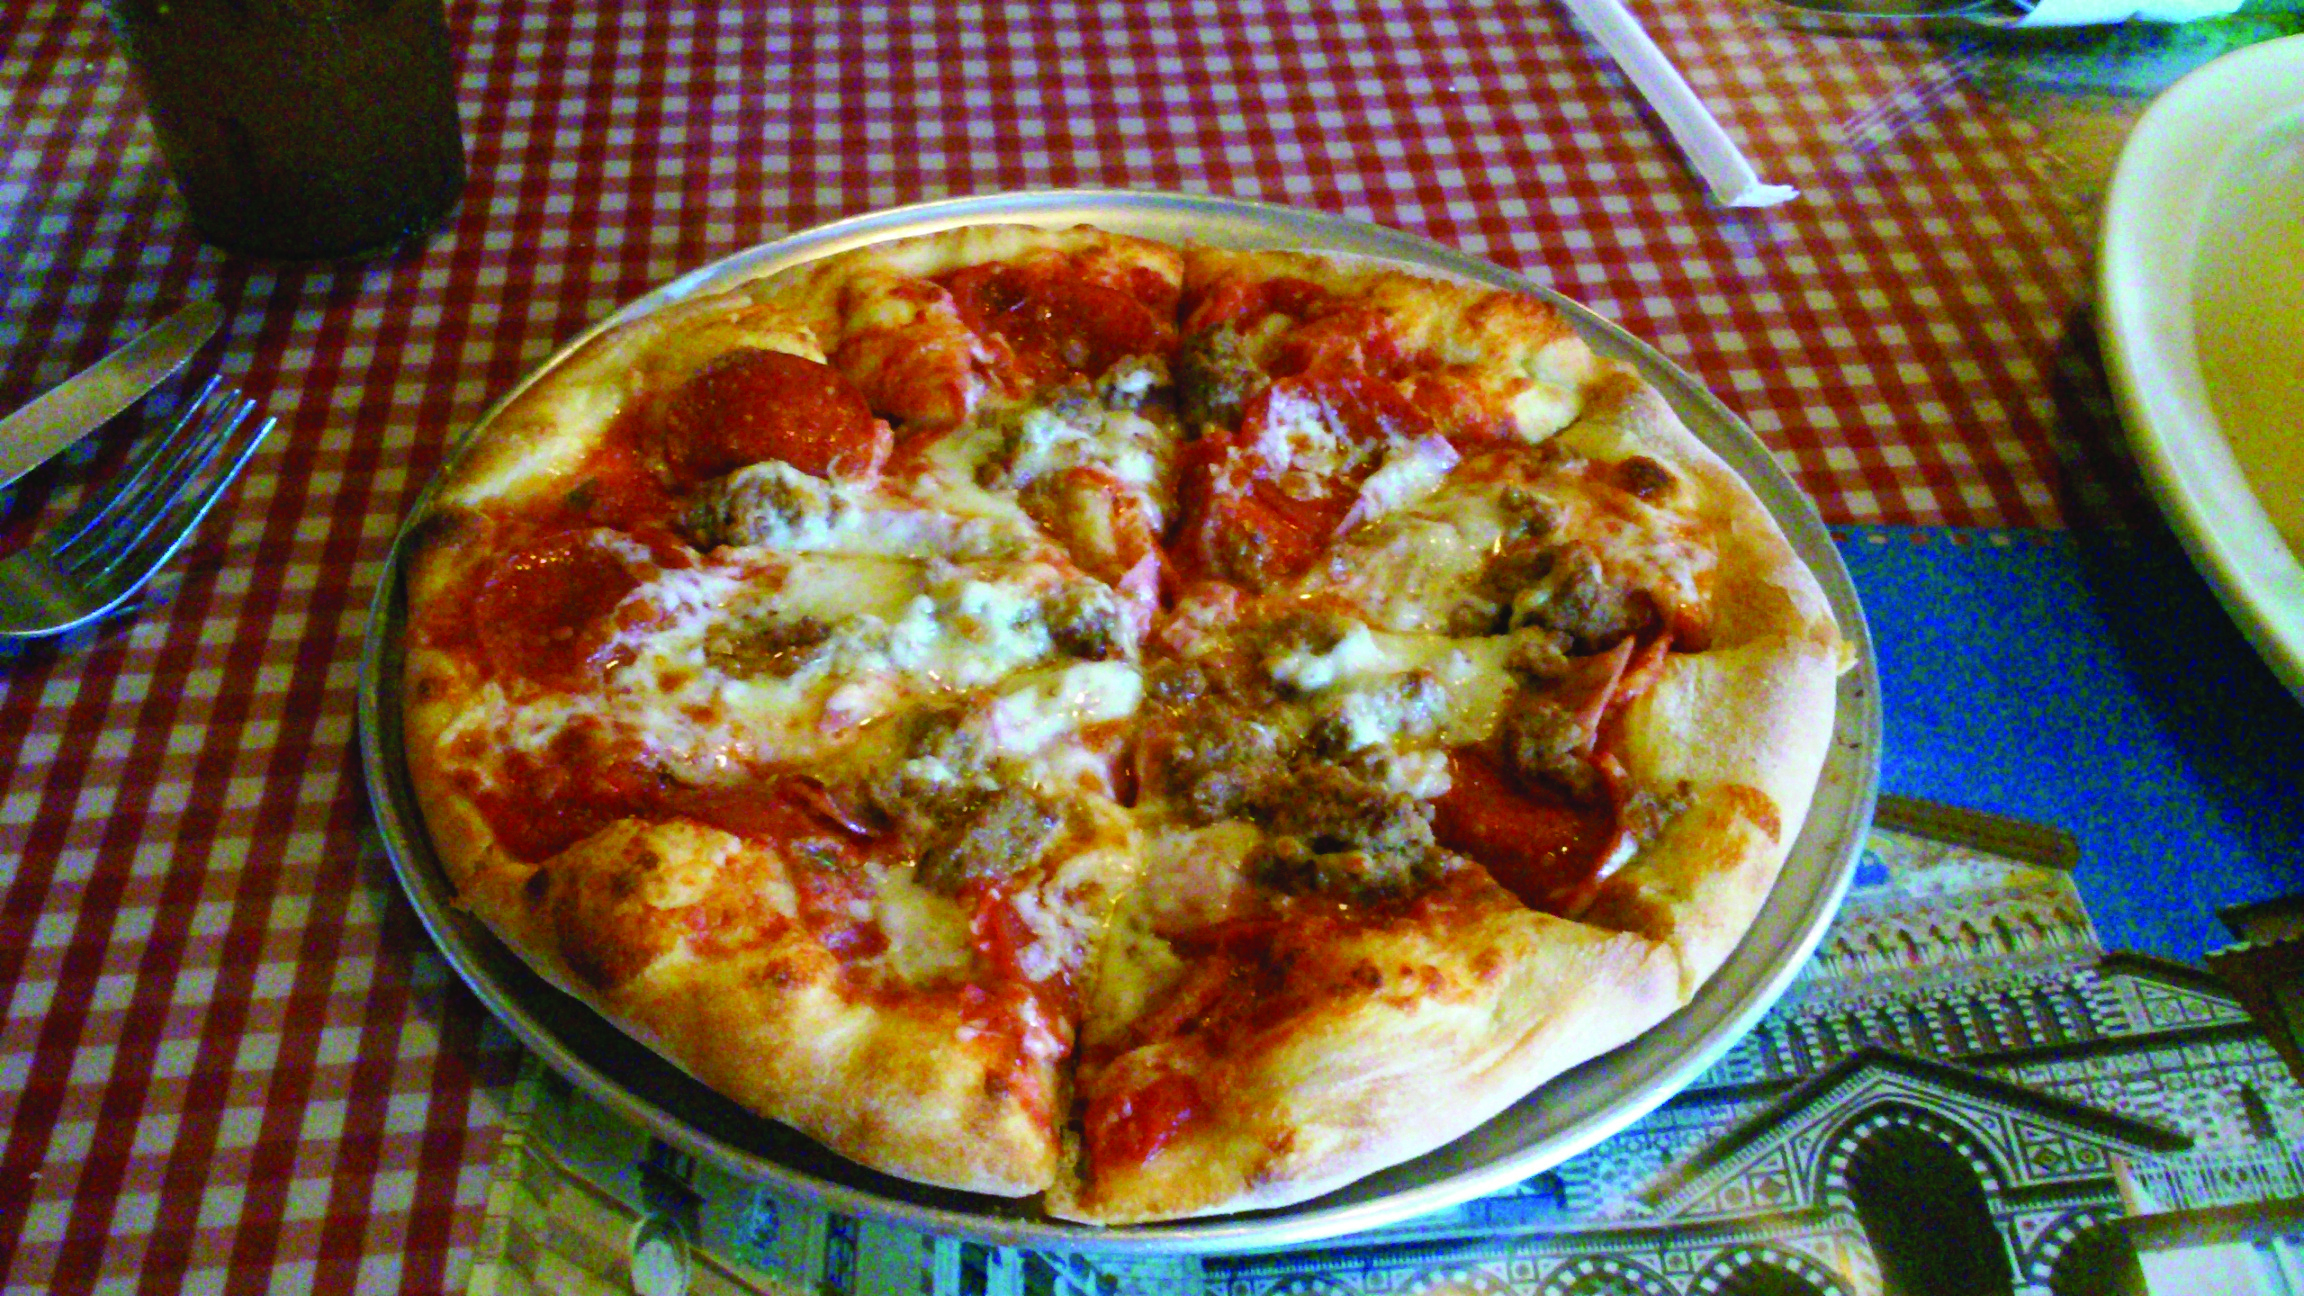 78209 Sept 2015 Wine Dine Photo Volare pizza